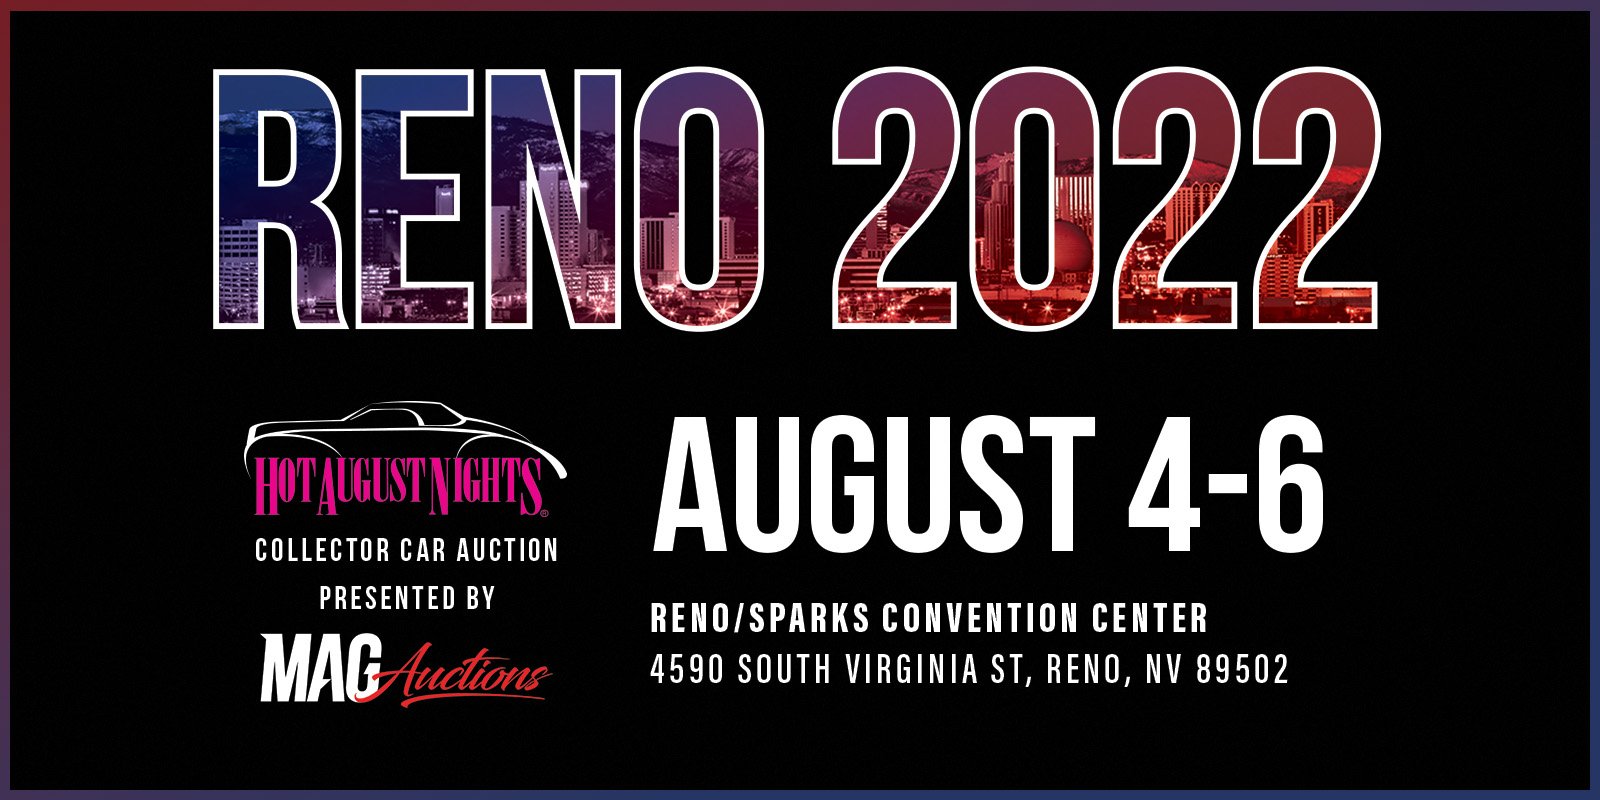 Reno 2022